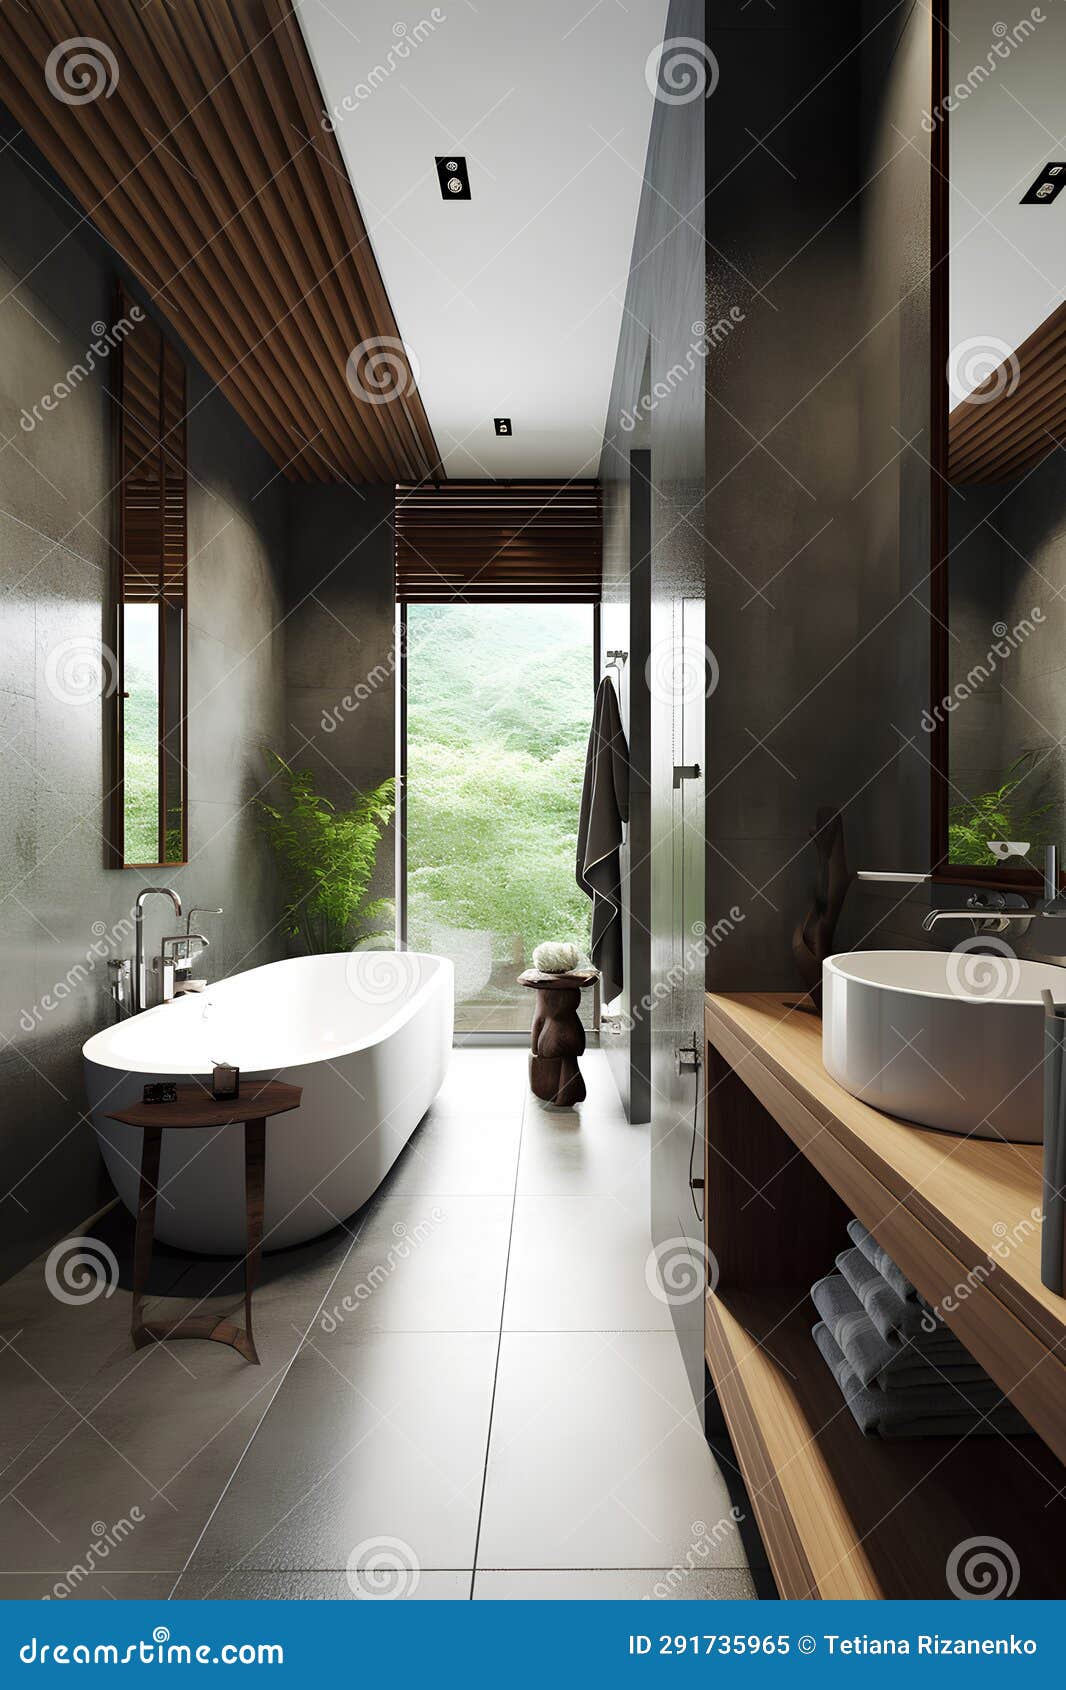 Japandi Style Interior of Bathroom in Modern House Stock Illustration ...